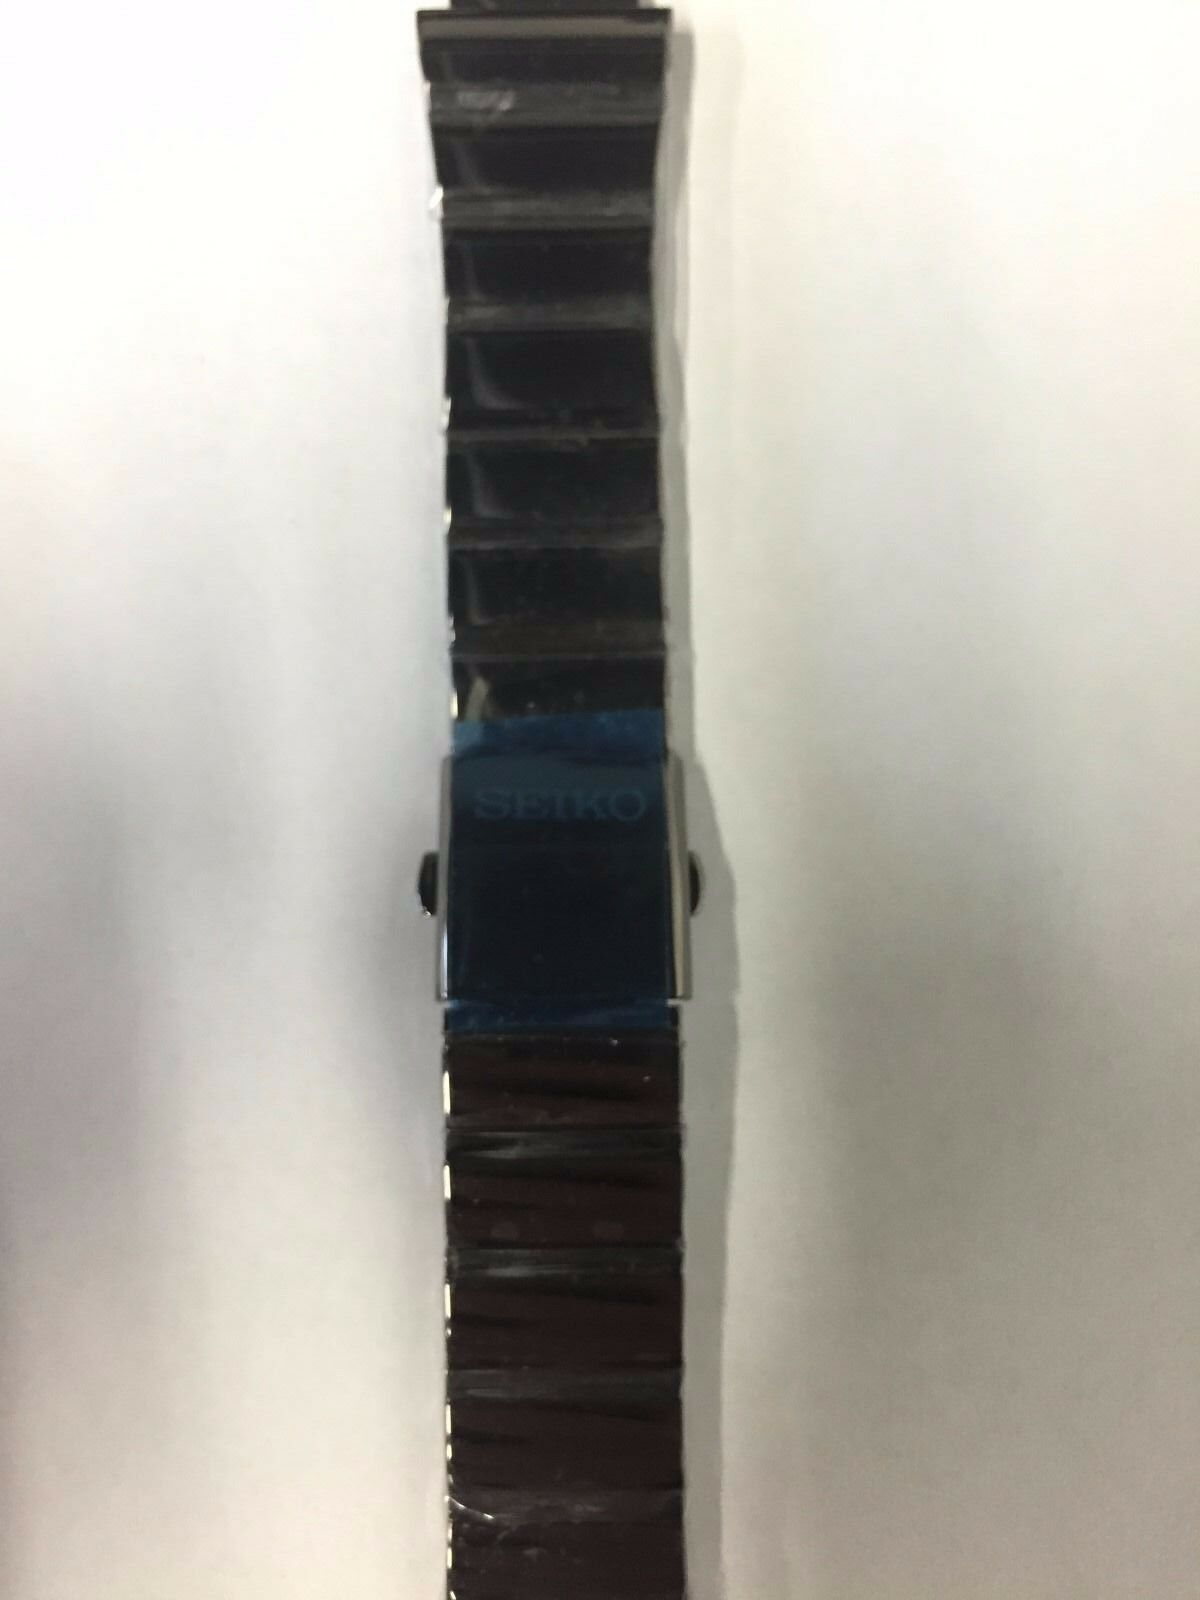 SEIKO SGEG19 SGEG25 Black Watch Band Replacement Stainless Steel Bracelet Links